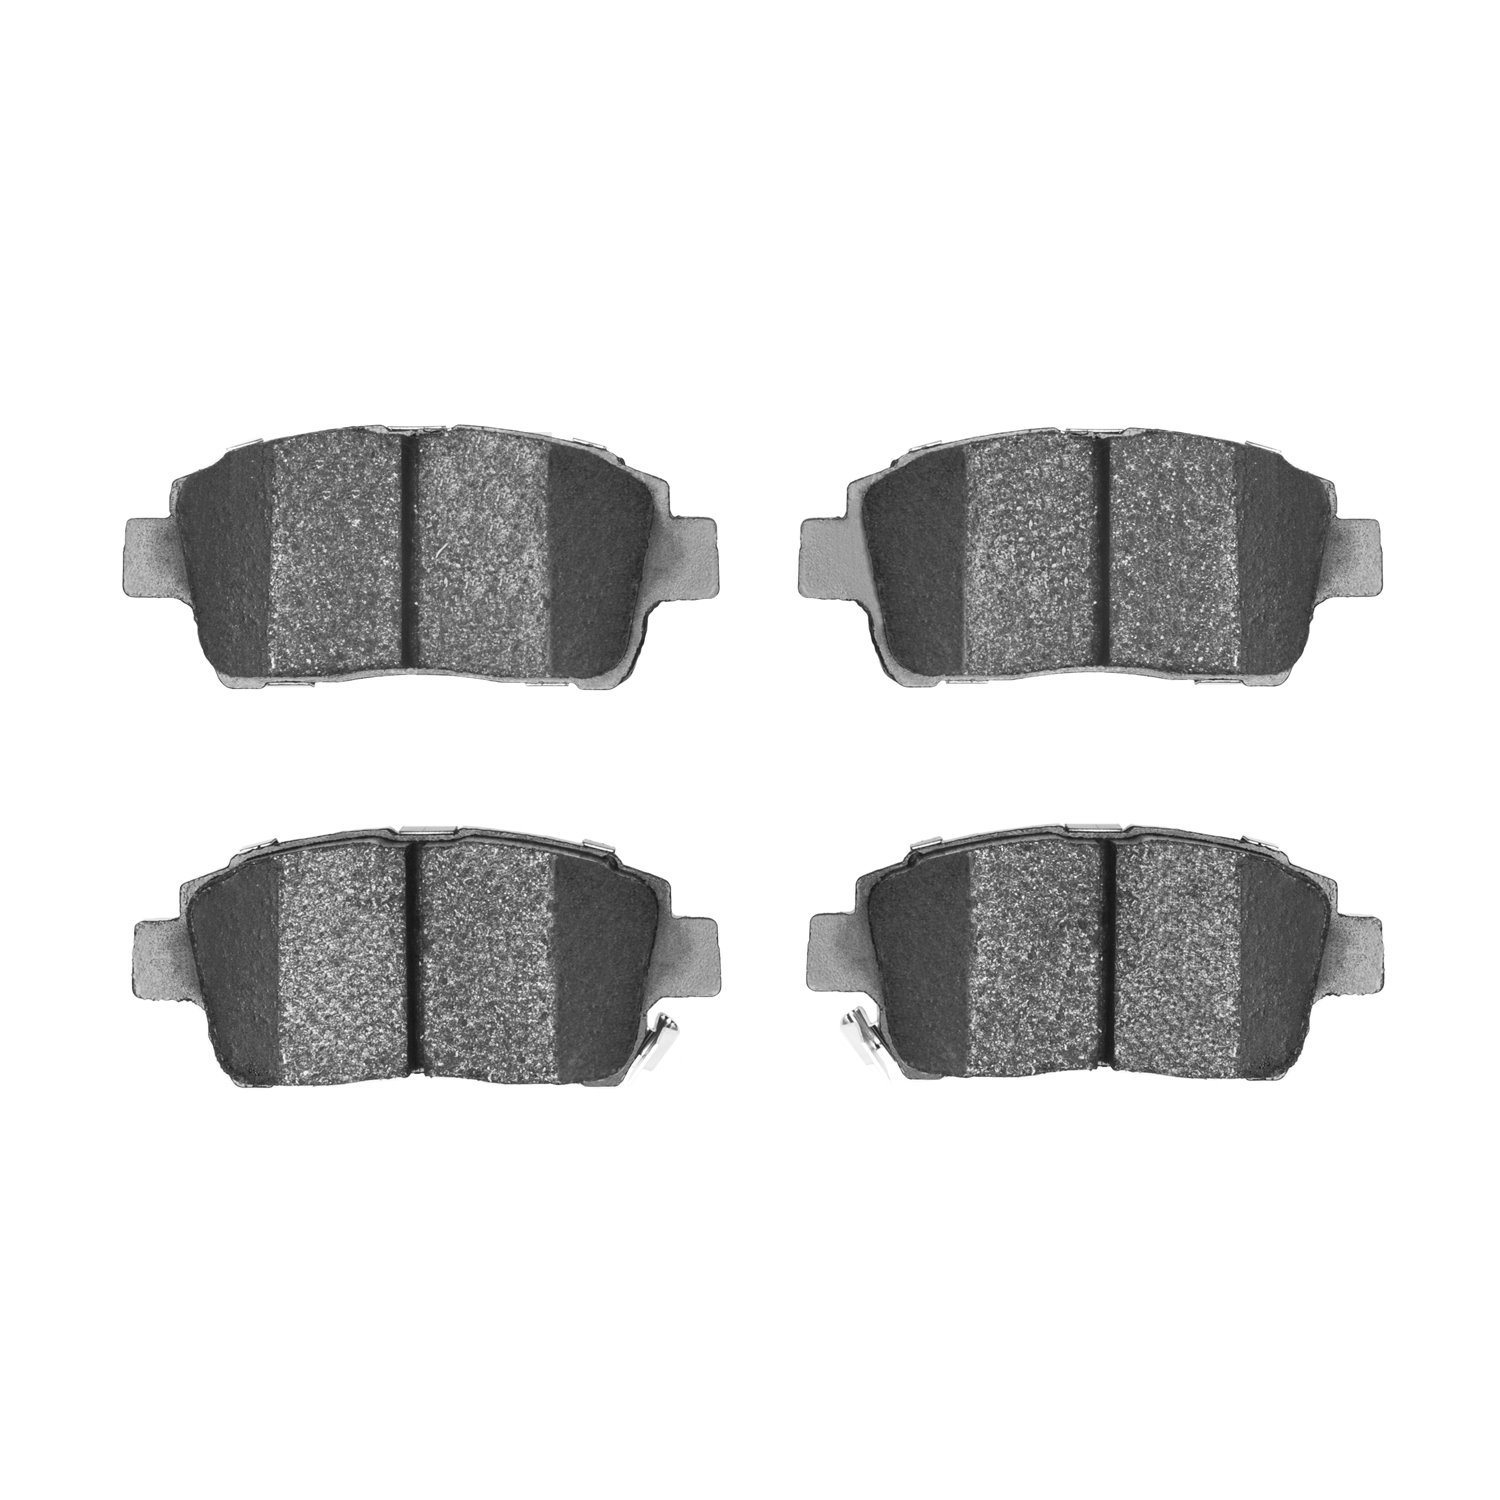 Optimum OE Brake Pads, 2000-2015 Fits Multiple Makes/Models, Position: Front